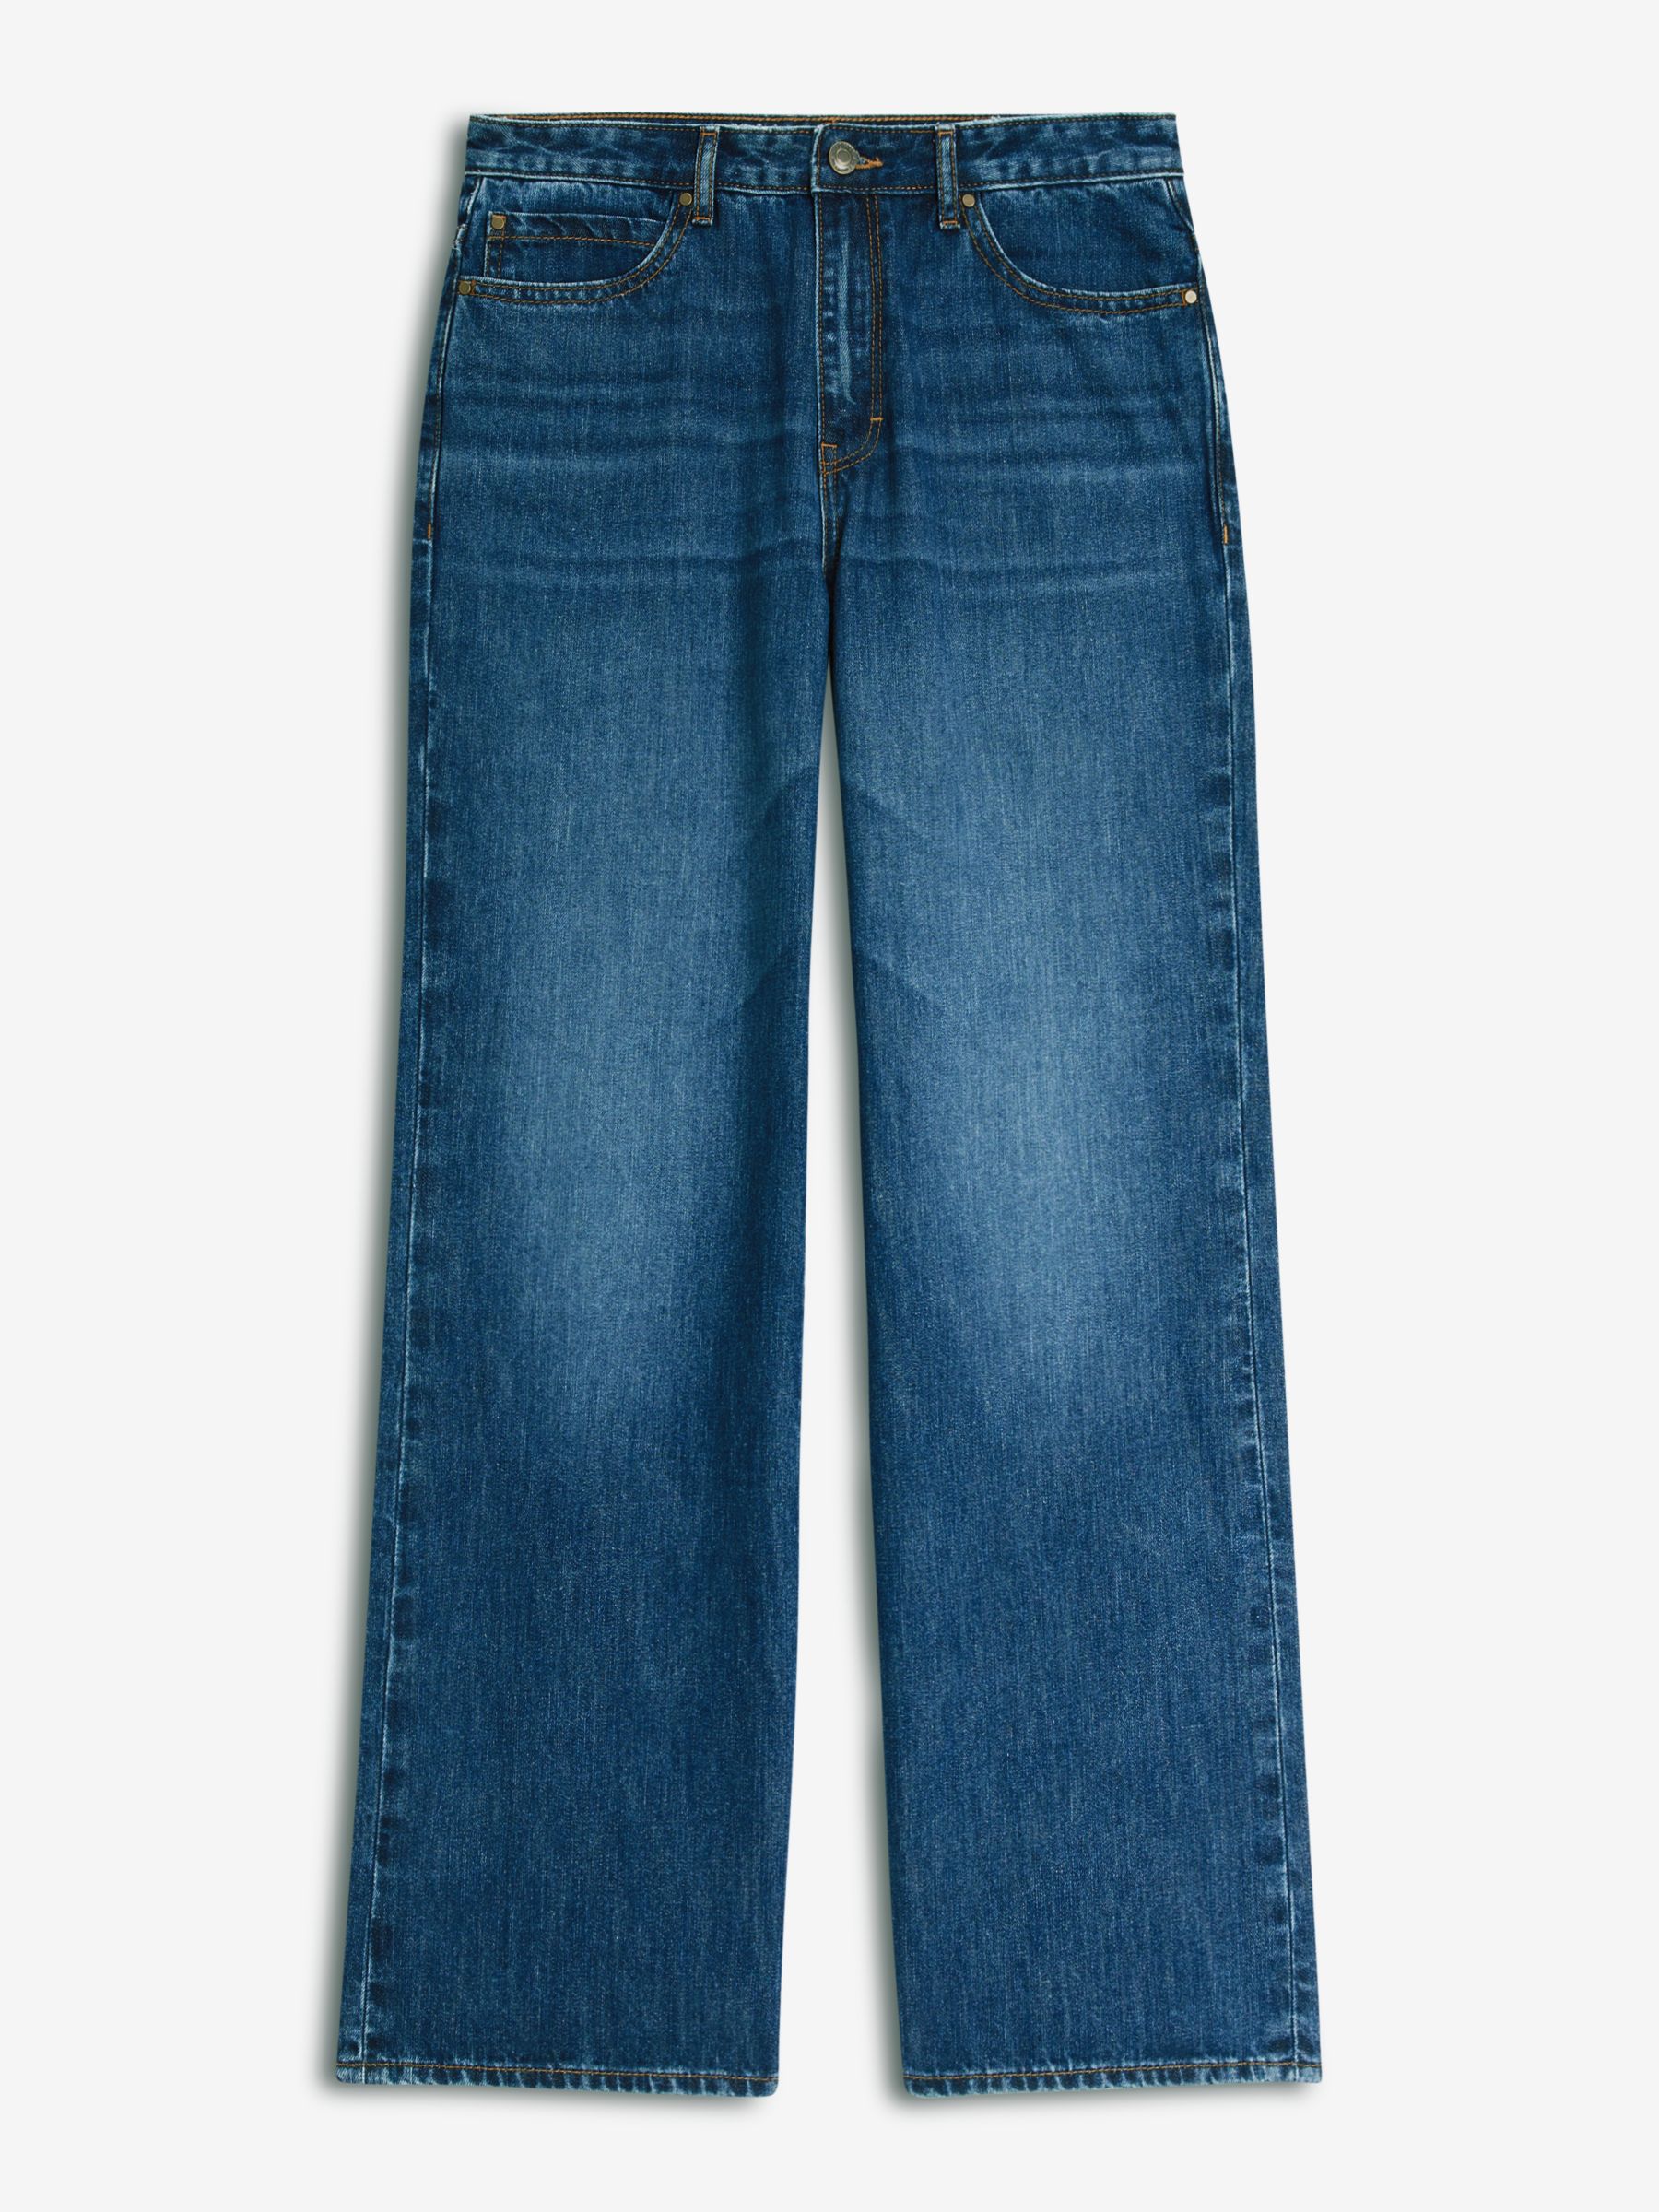 John Lewis ANYDAY Plain Wide Leg Jeans, Mid Wash Blue, 6